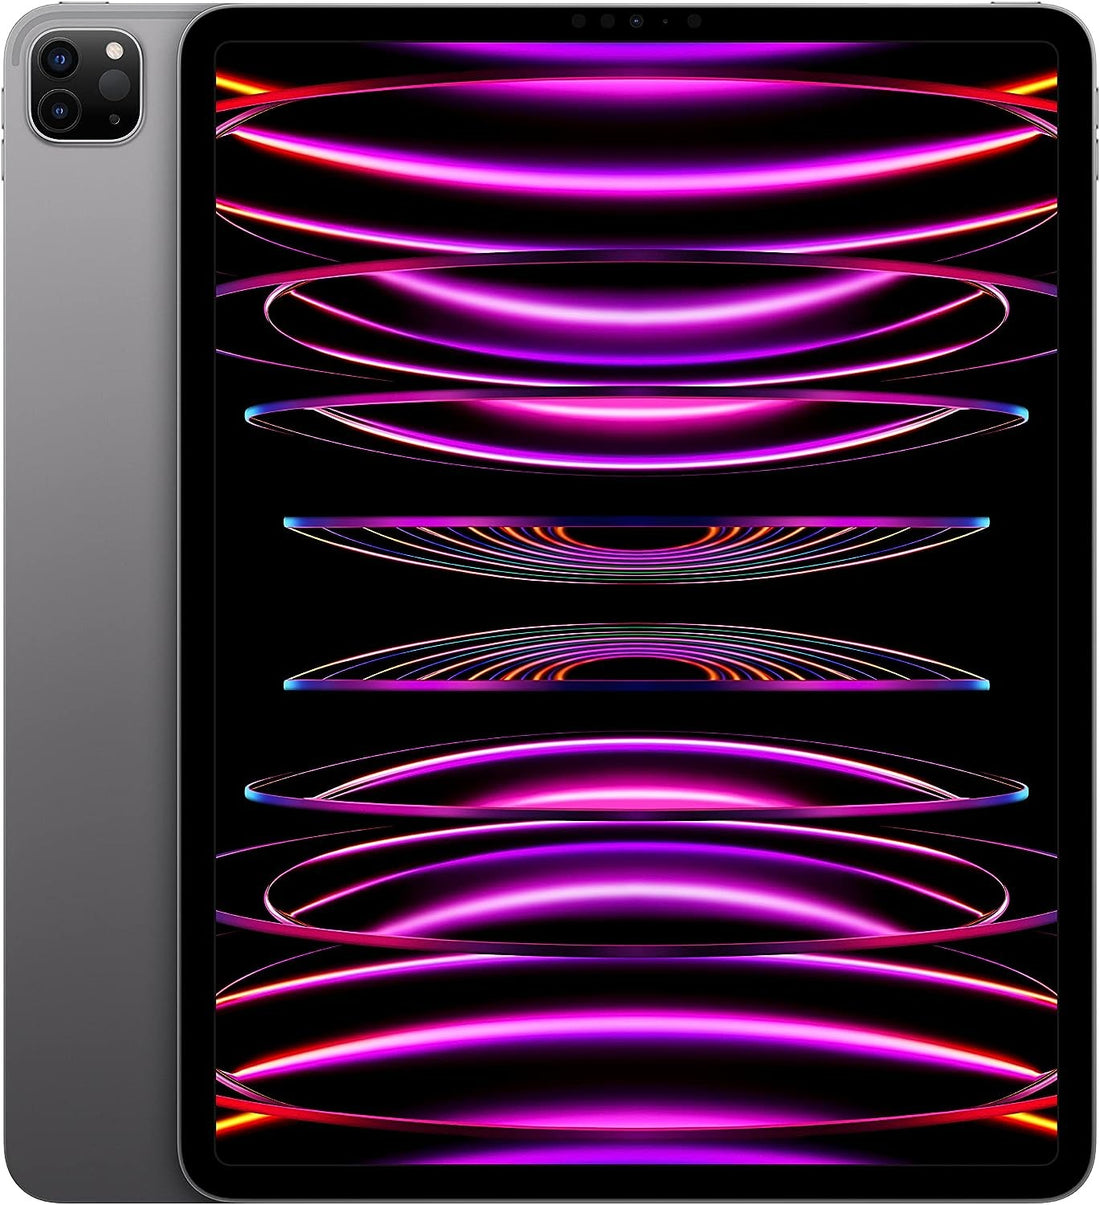 Apple iPad Pro 6th Gen 11 in. - 512GB (Wifi + Cellular) (Unlocked) - Space Gray (Refurbished)